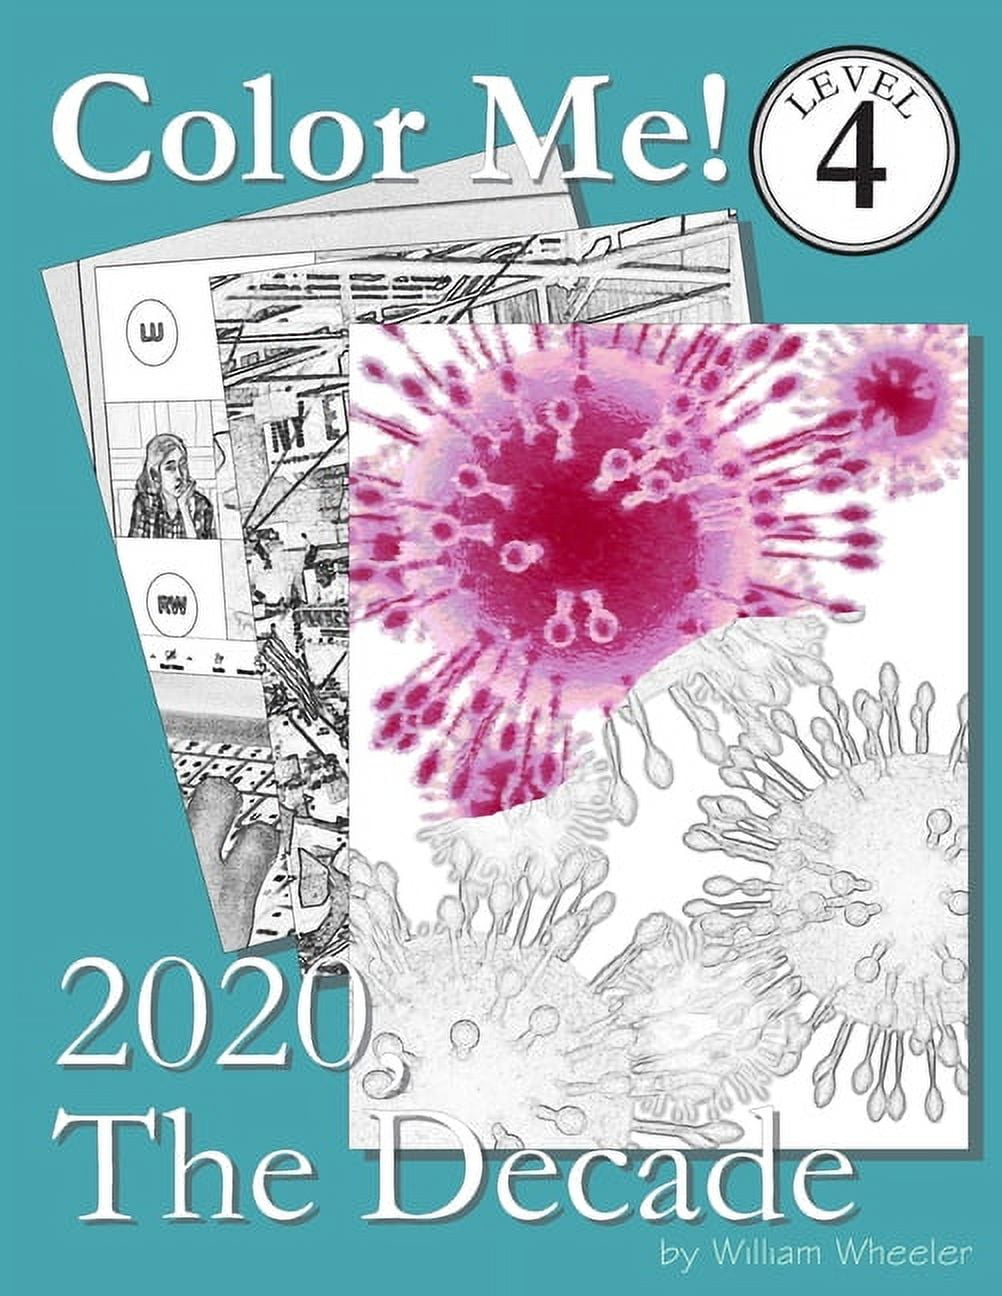  Crayola HD Coloring Kit, 30 Colored Pencils & 20